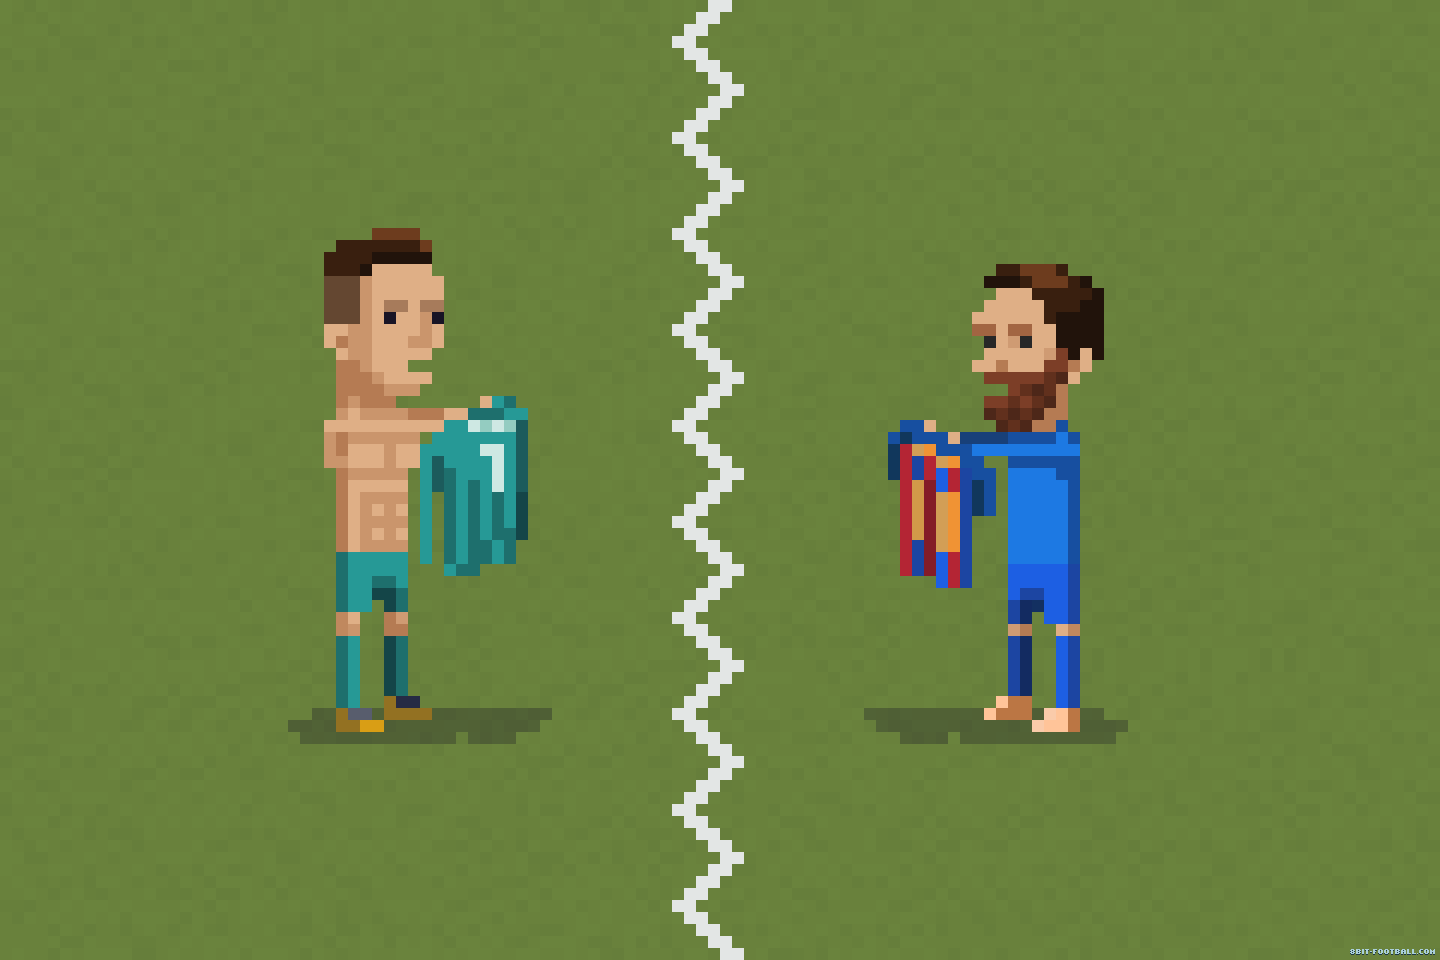 More Messi and Ronaldo